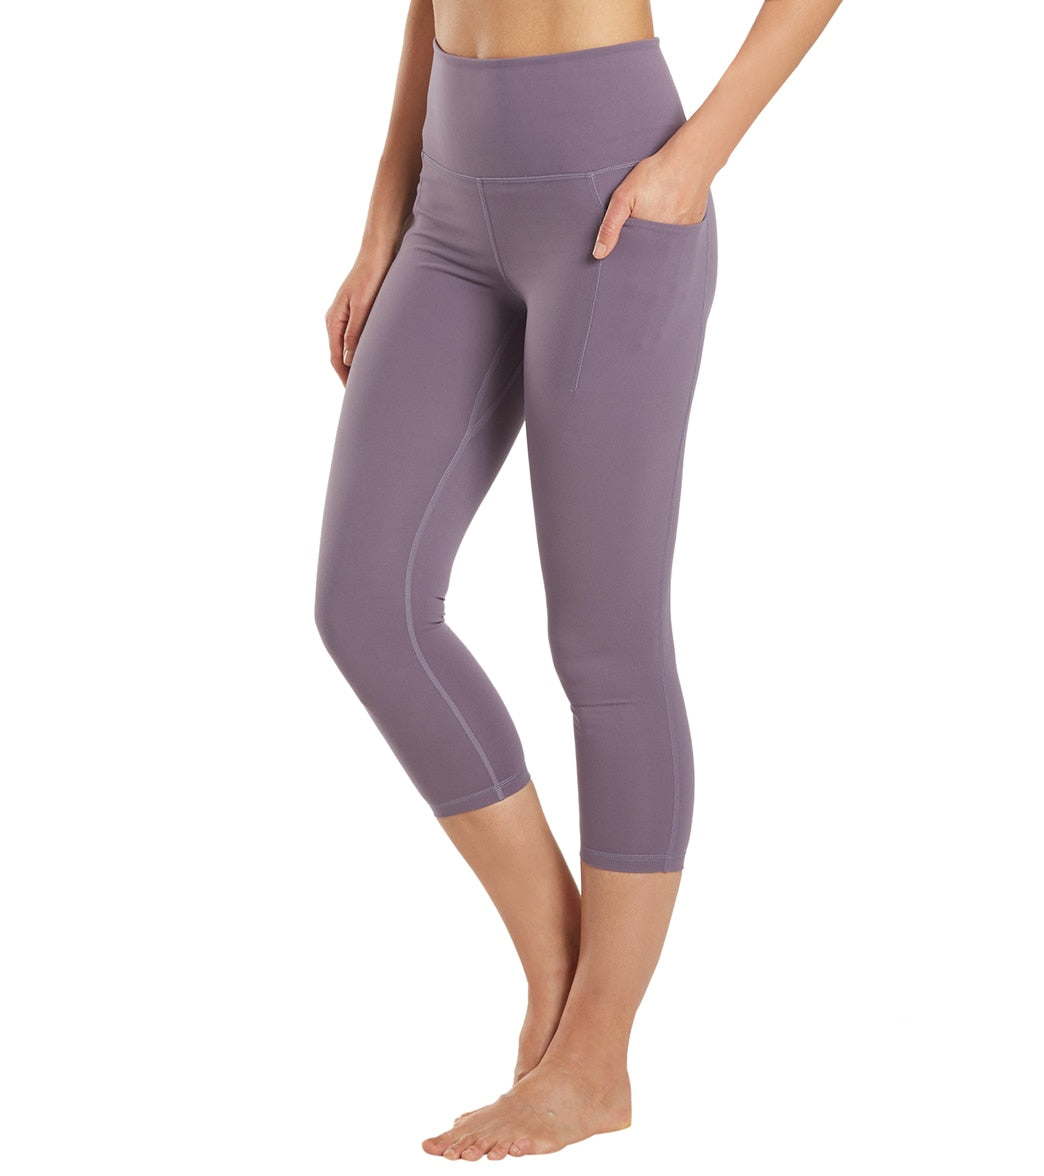 Capri Leggings With Pockets for Women Fashion Ladies Pure Color Lifting  Elastic Fitness Capri Purple XL